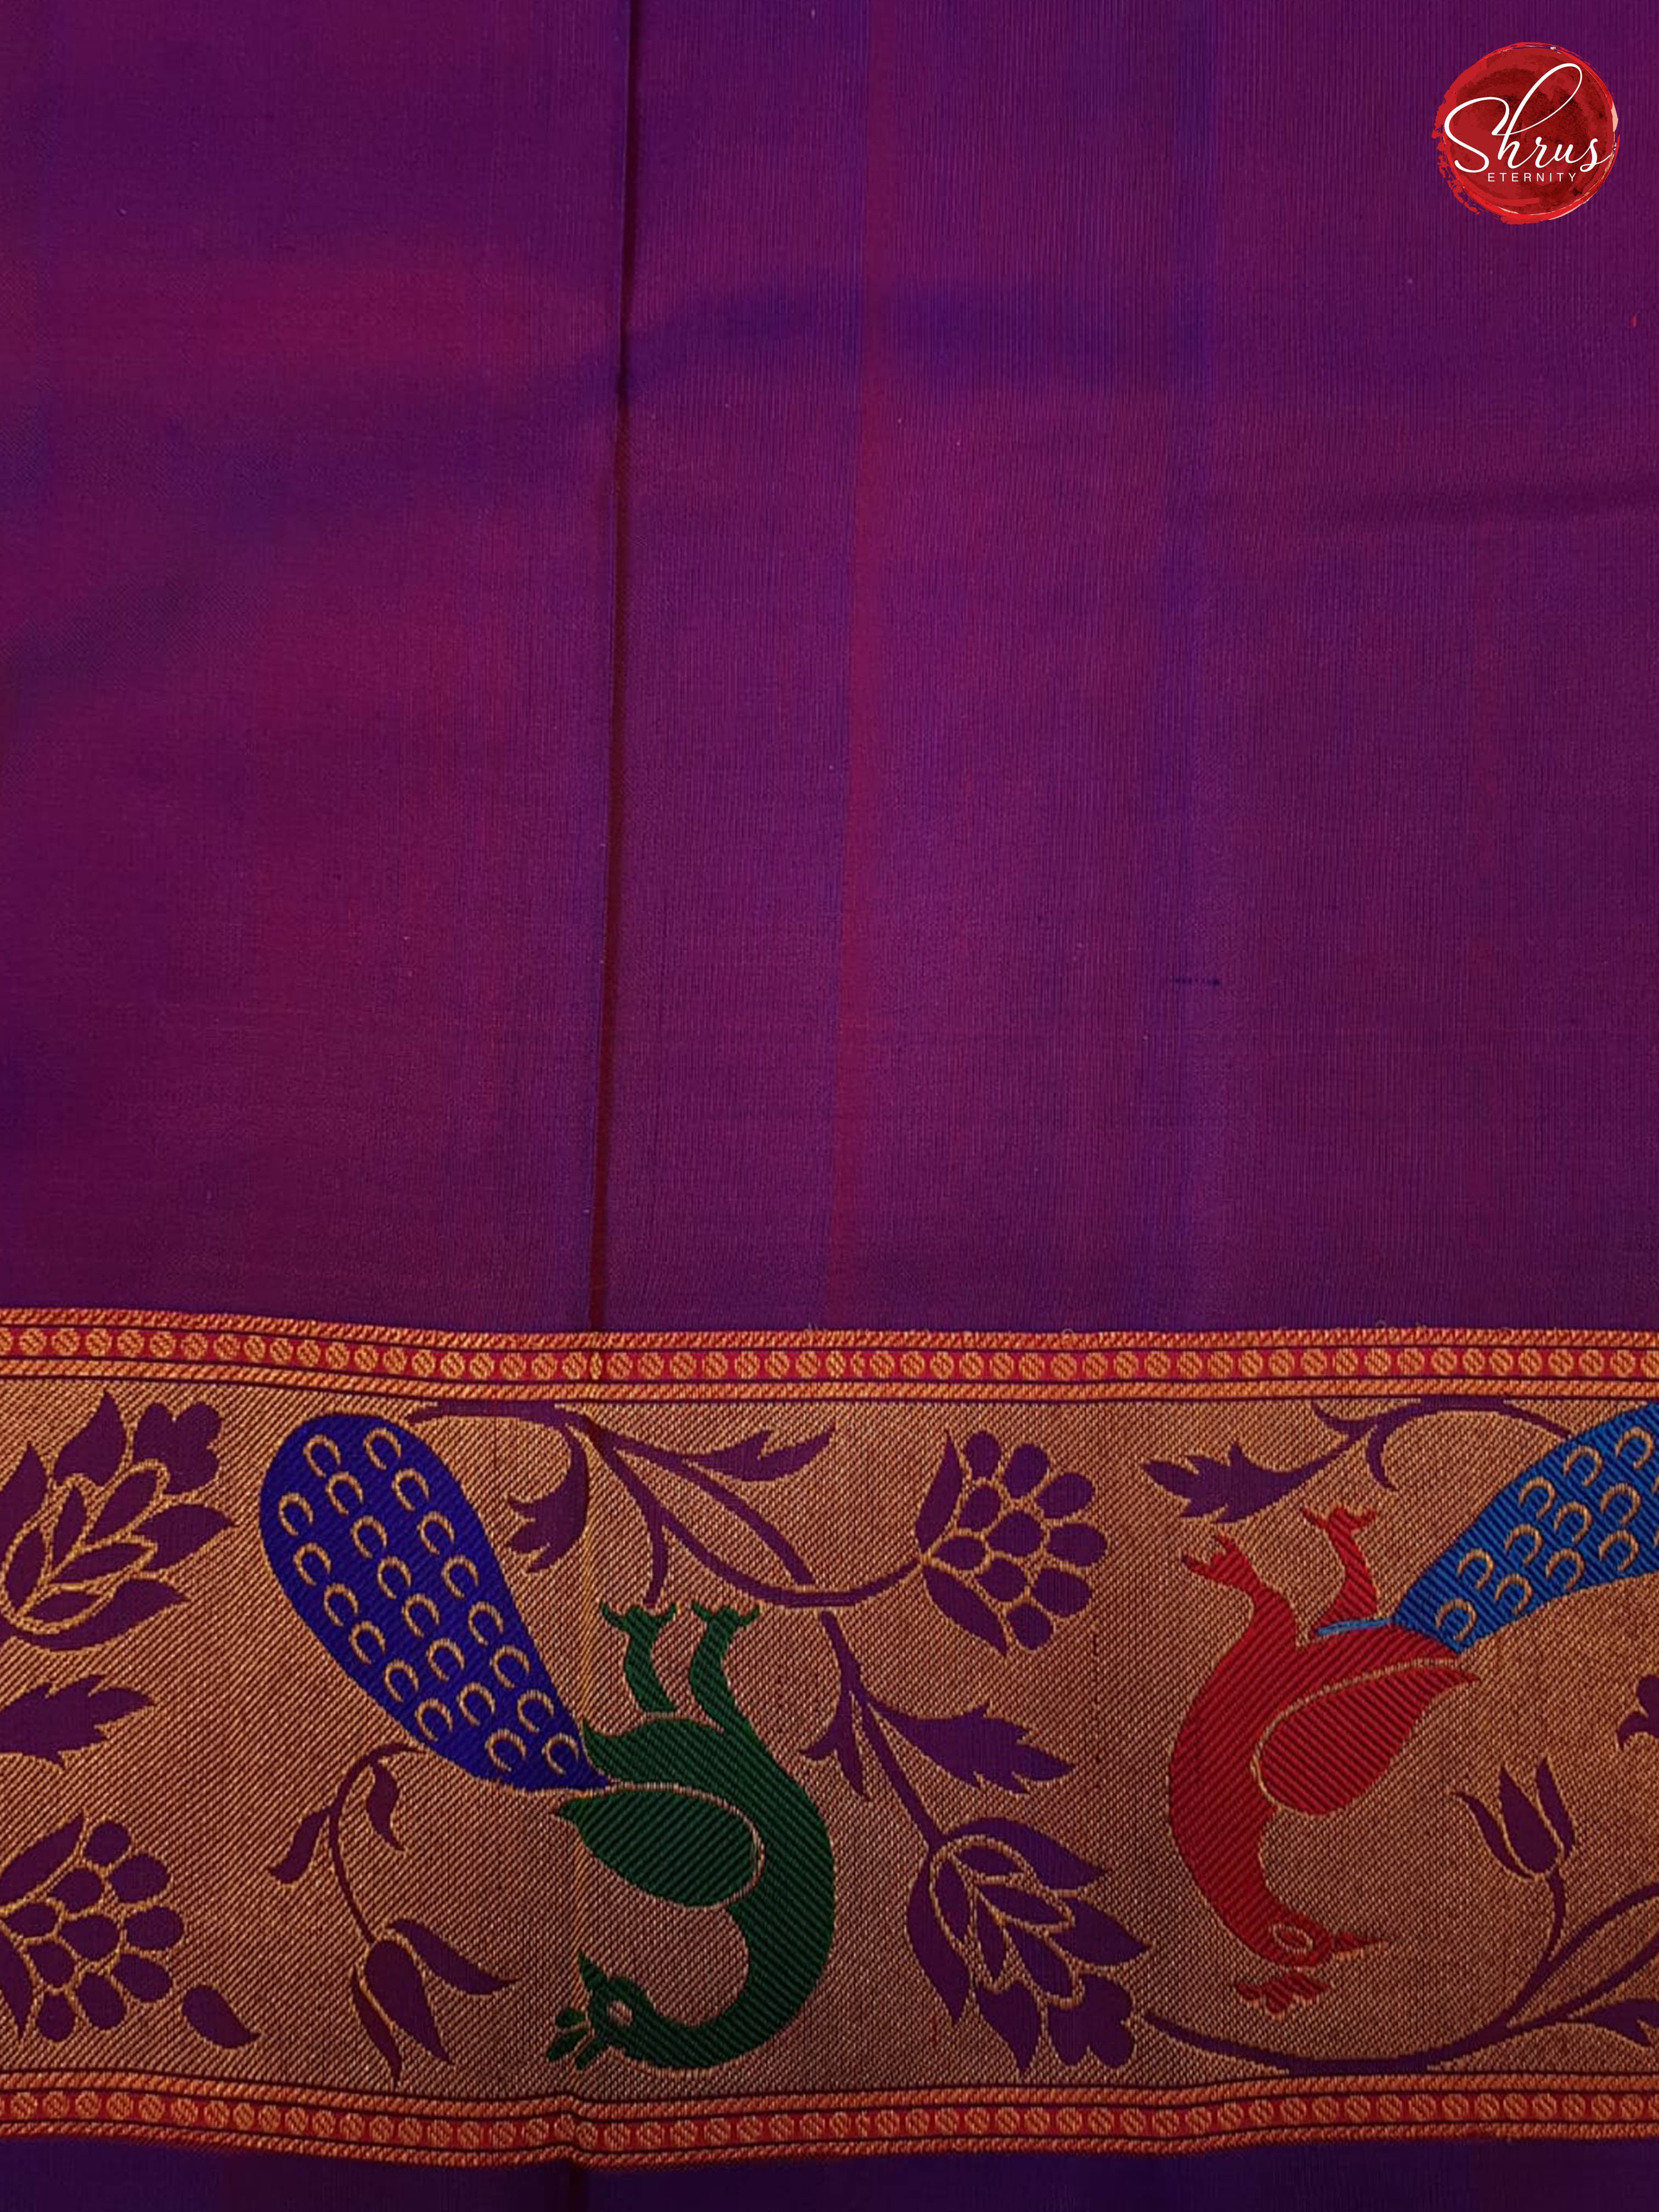 Red & Purple - Gadwal Silk - Shop on ShrusEternity.com